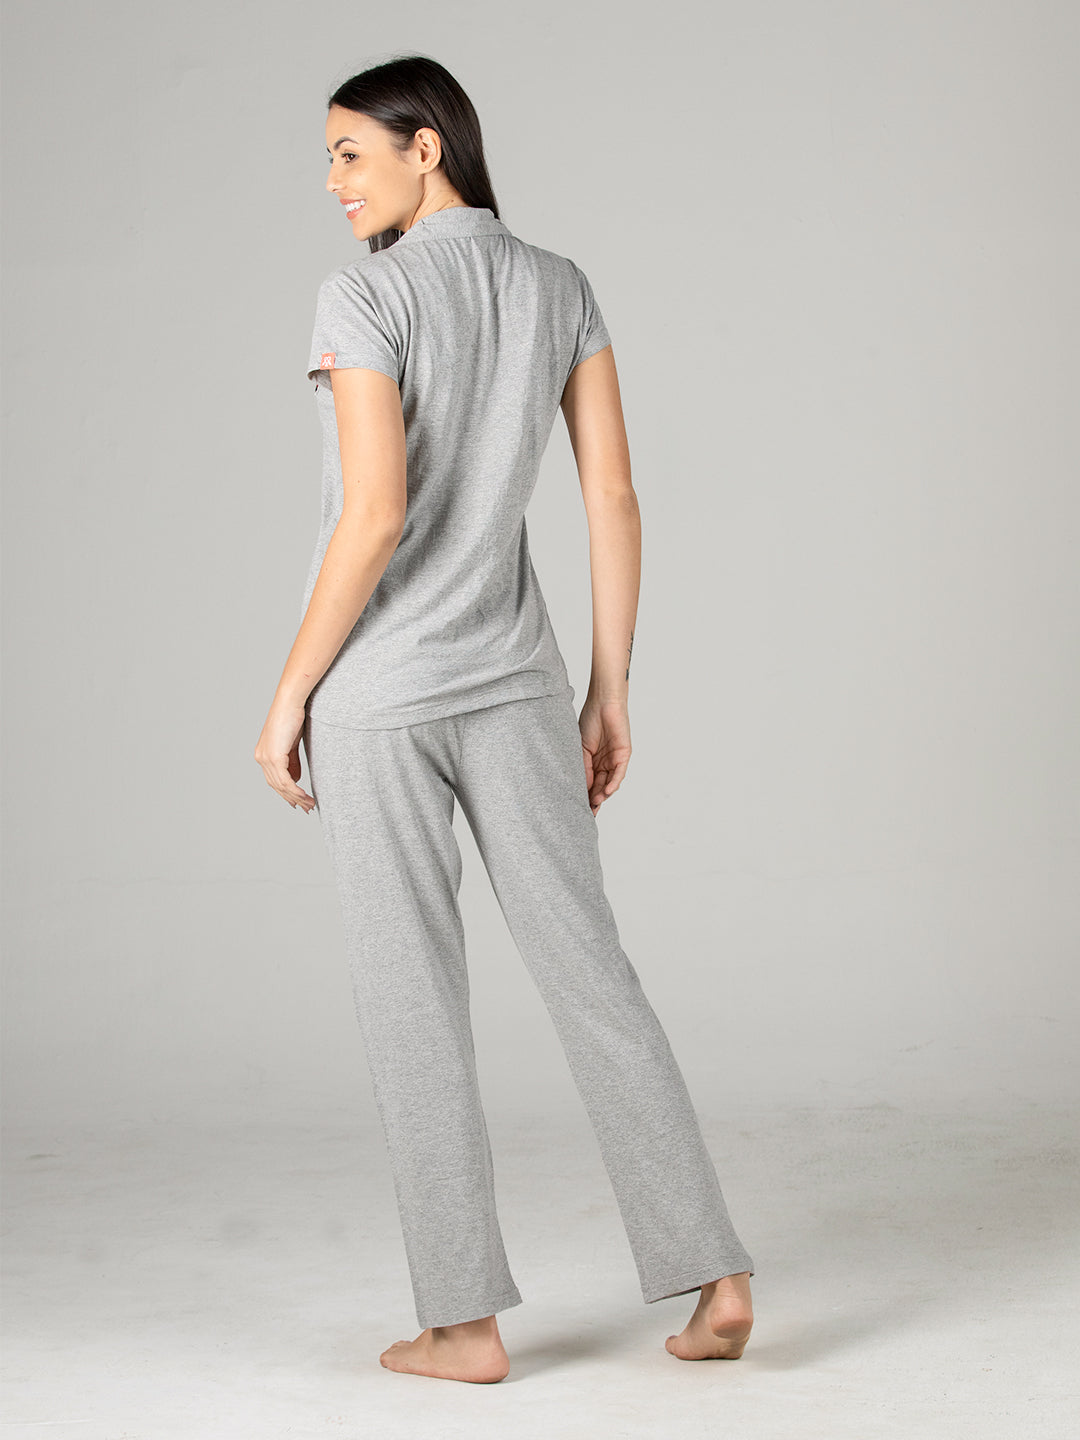 Evolove Grey Super soft most comfortable Pajama set